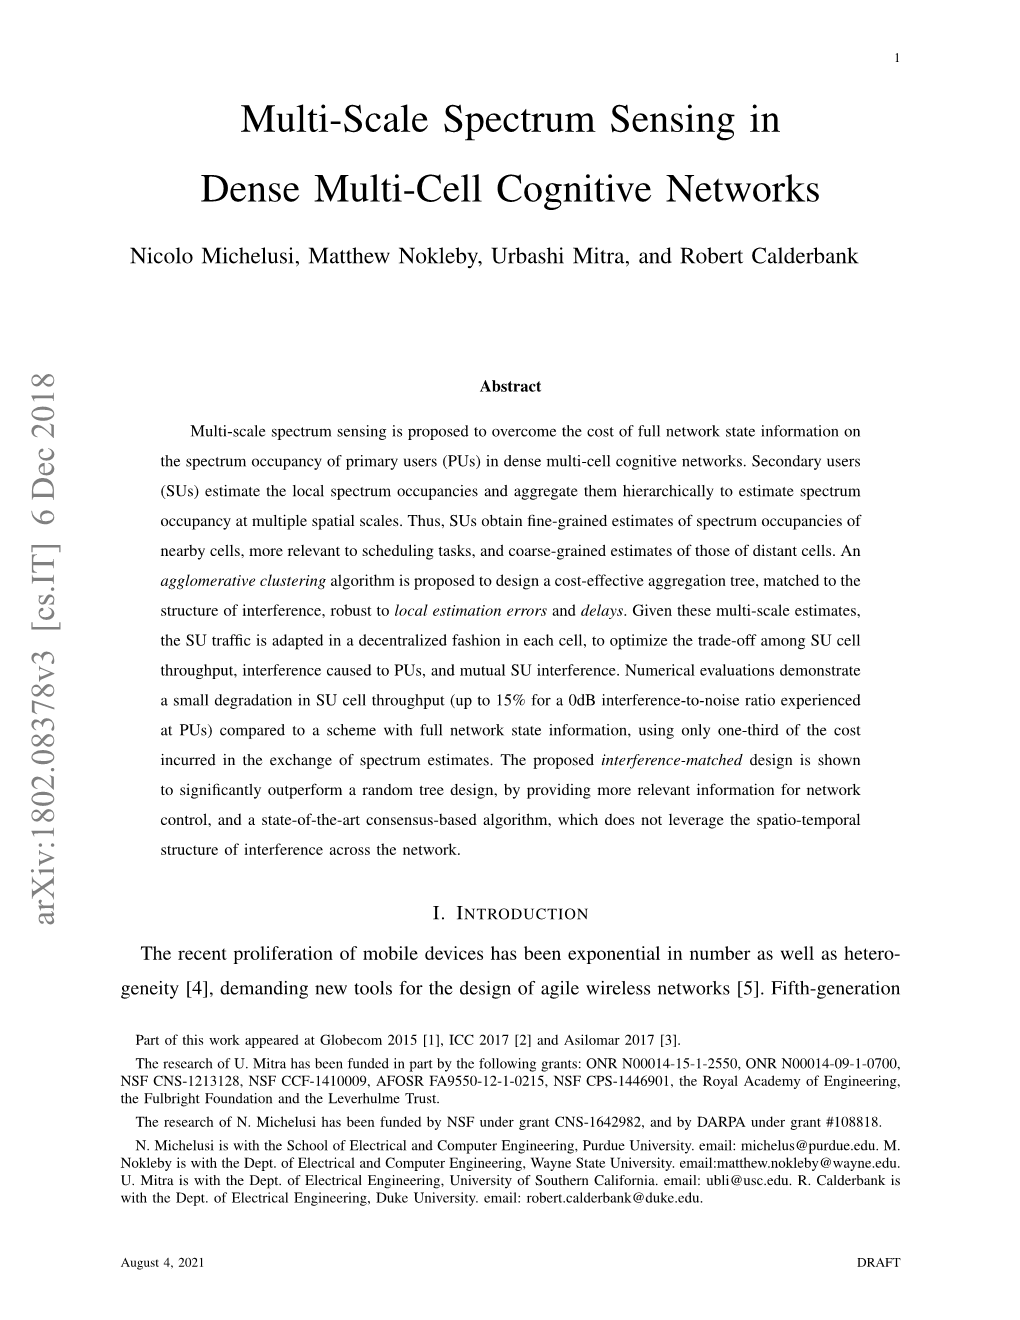 Multi-Scale Spectrum Sensing in Dense Multi-Cell Cognitive Networks